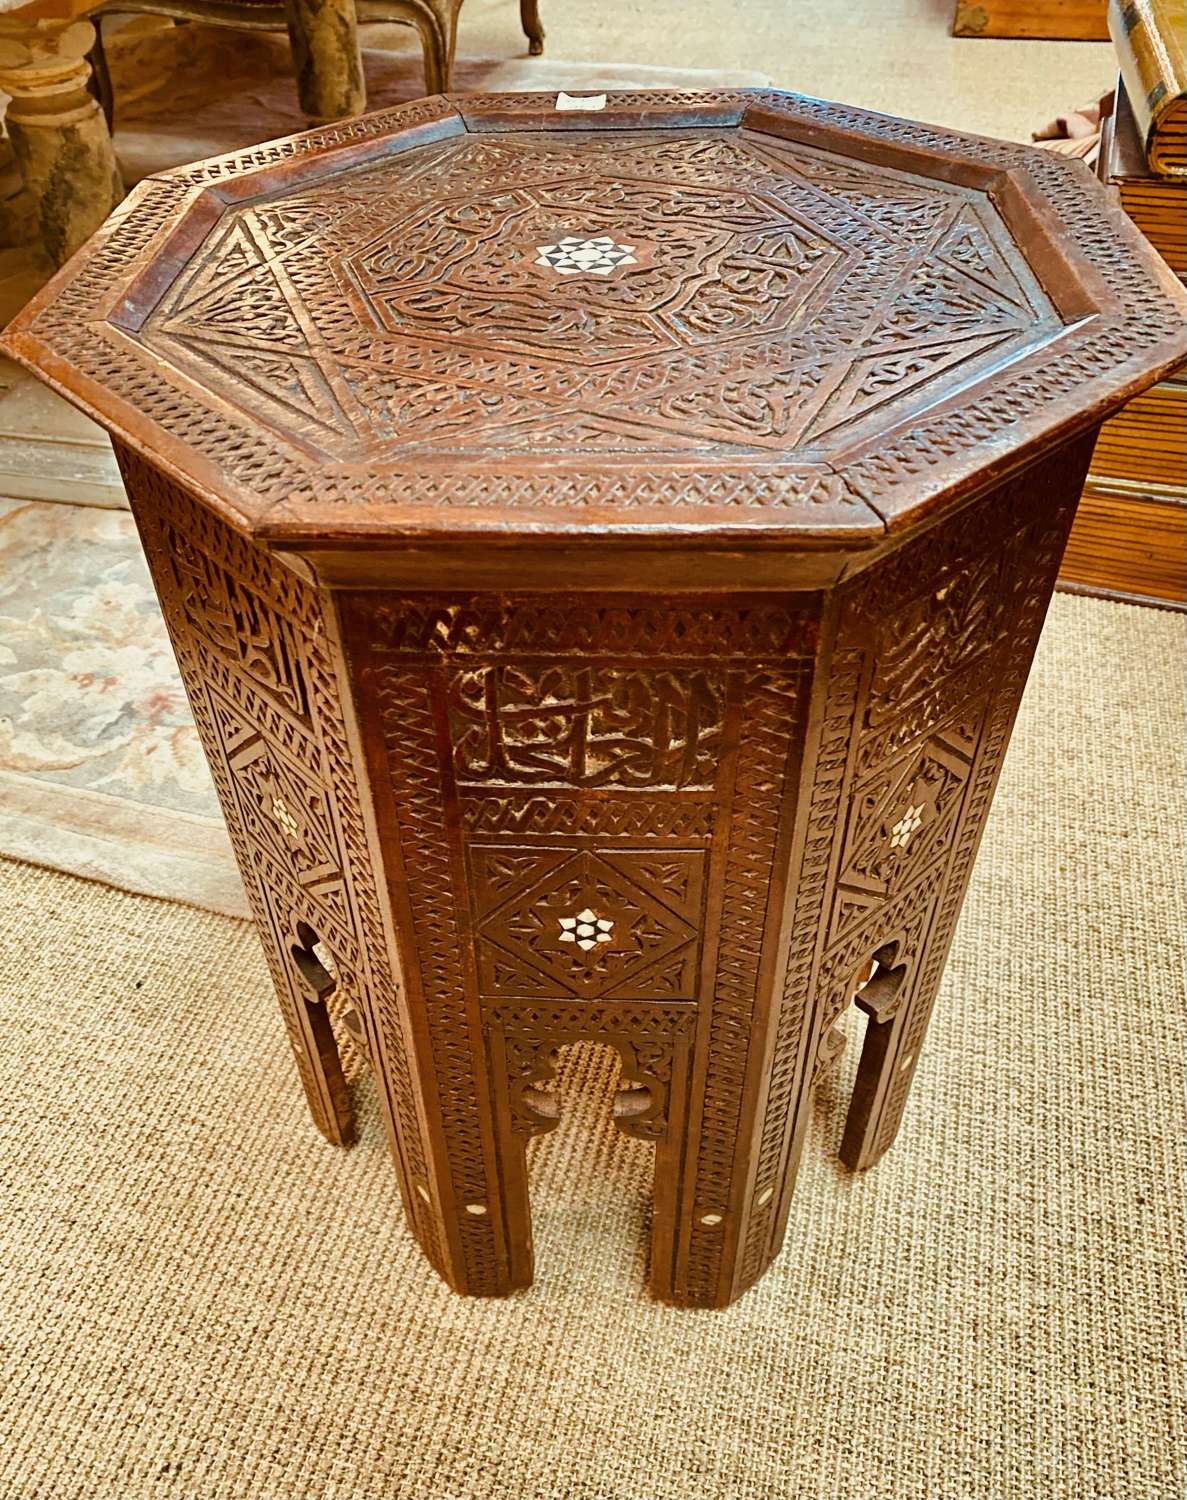 Vintage Syrian hexagonal table